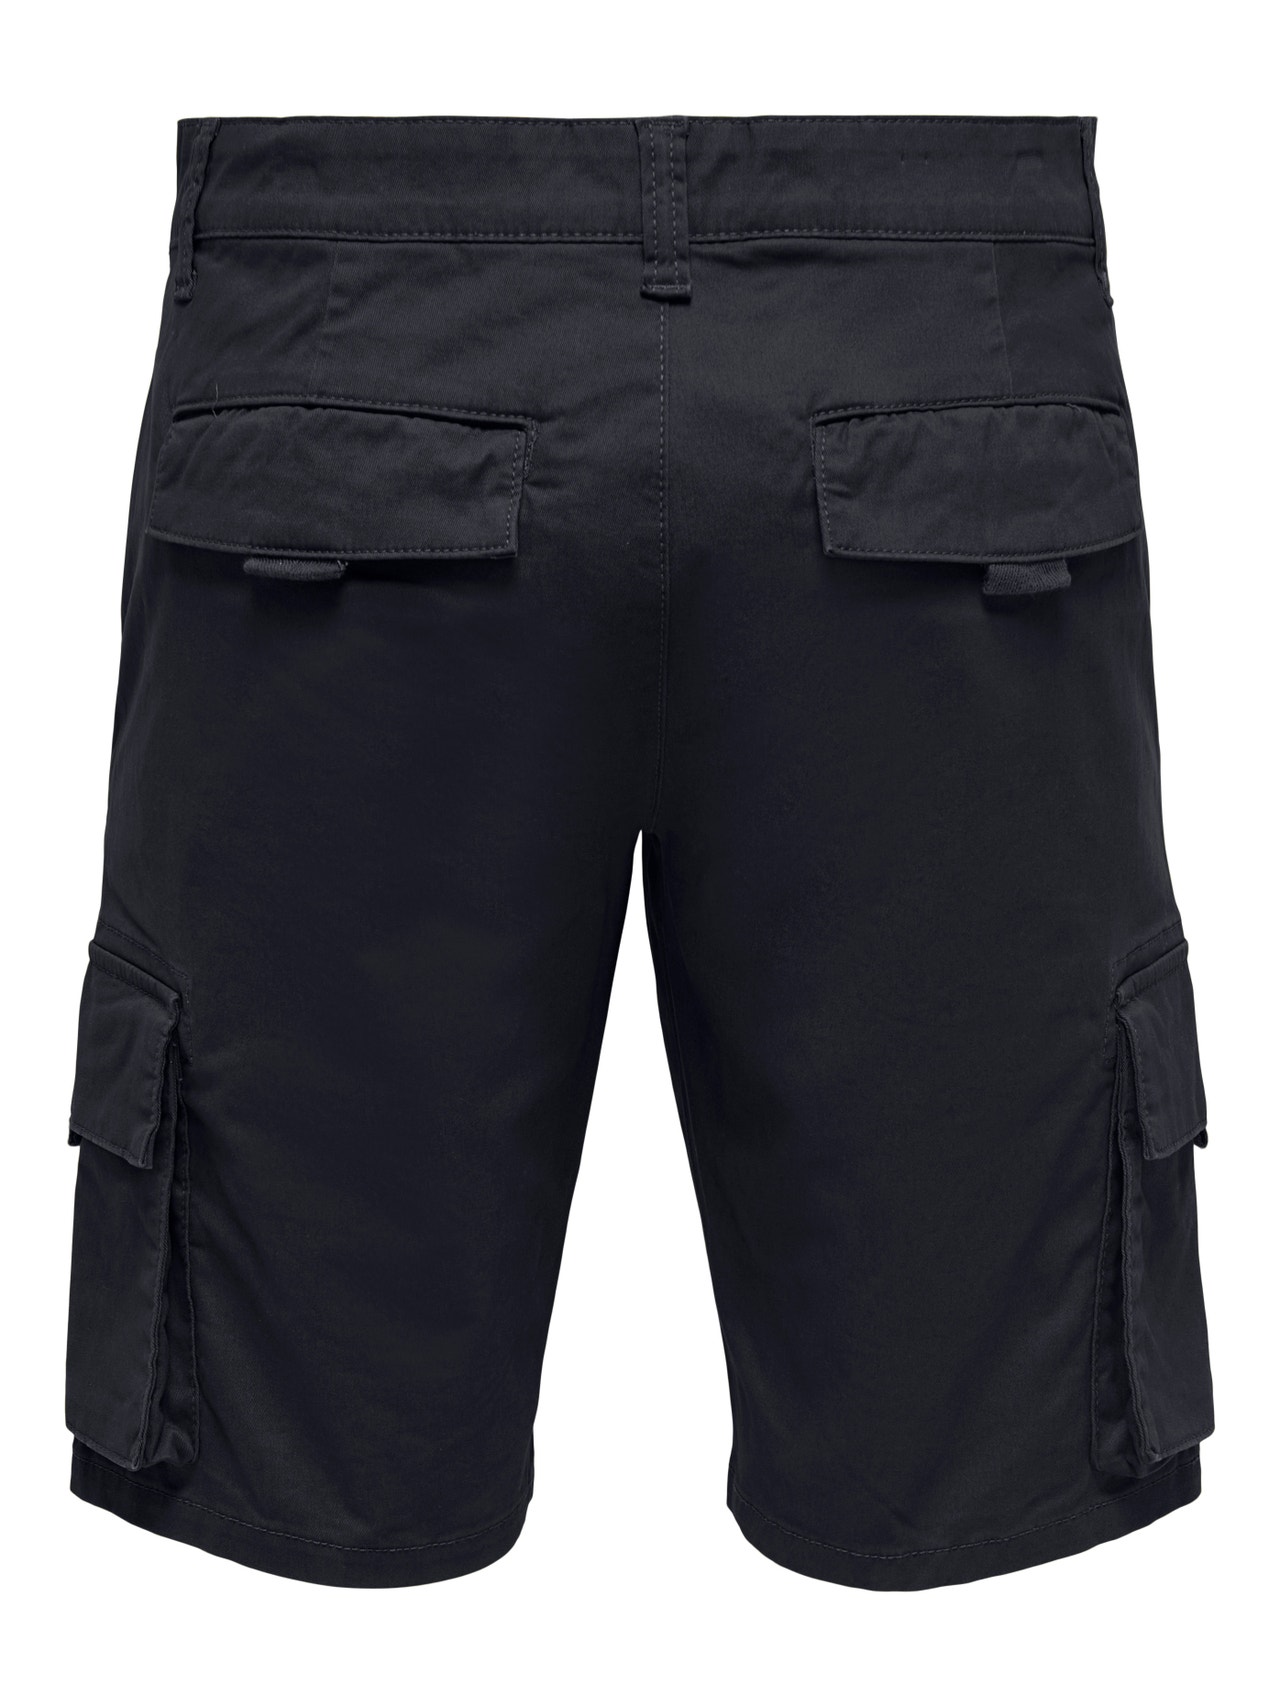 ONLY & SONS Regular Fit Cargo Shorts -Dark Navy - 22024564